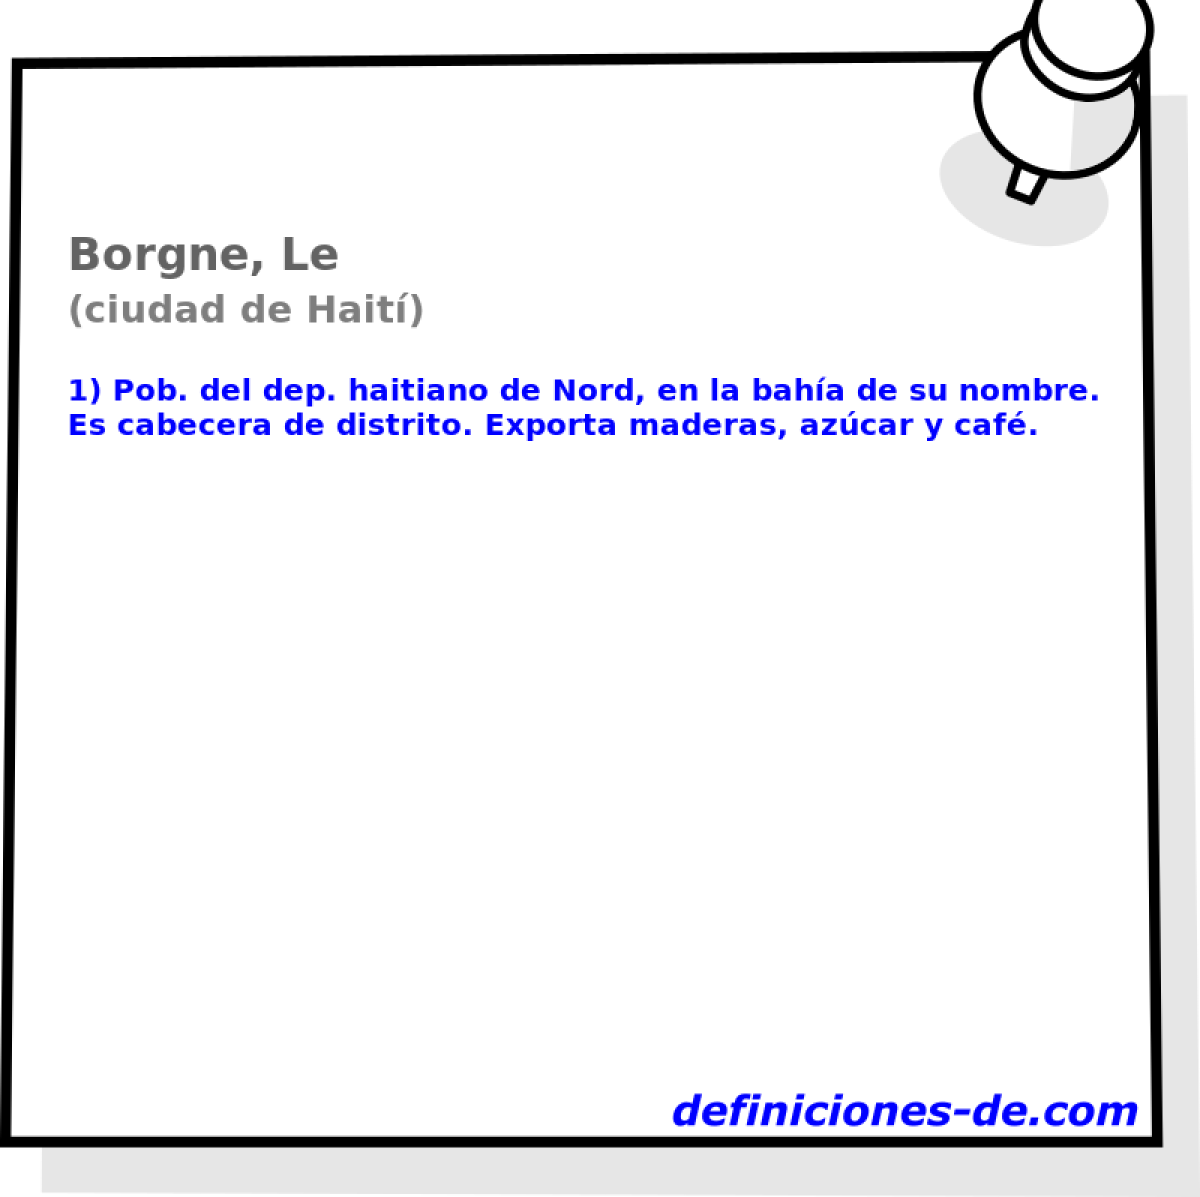 Borgne, Le (ciudad de Hait)